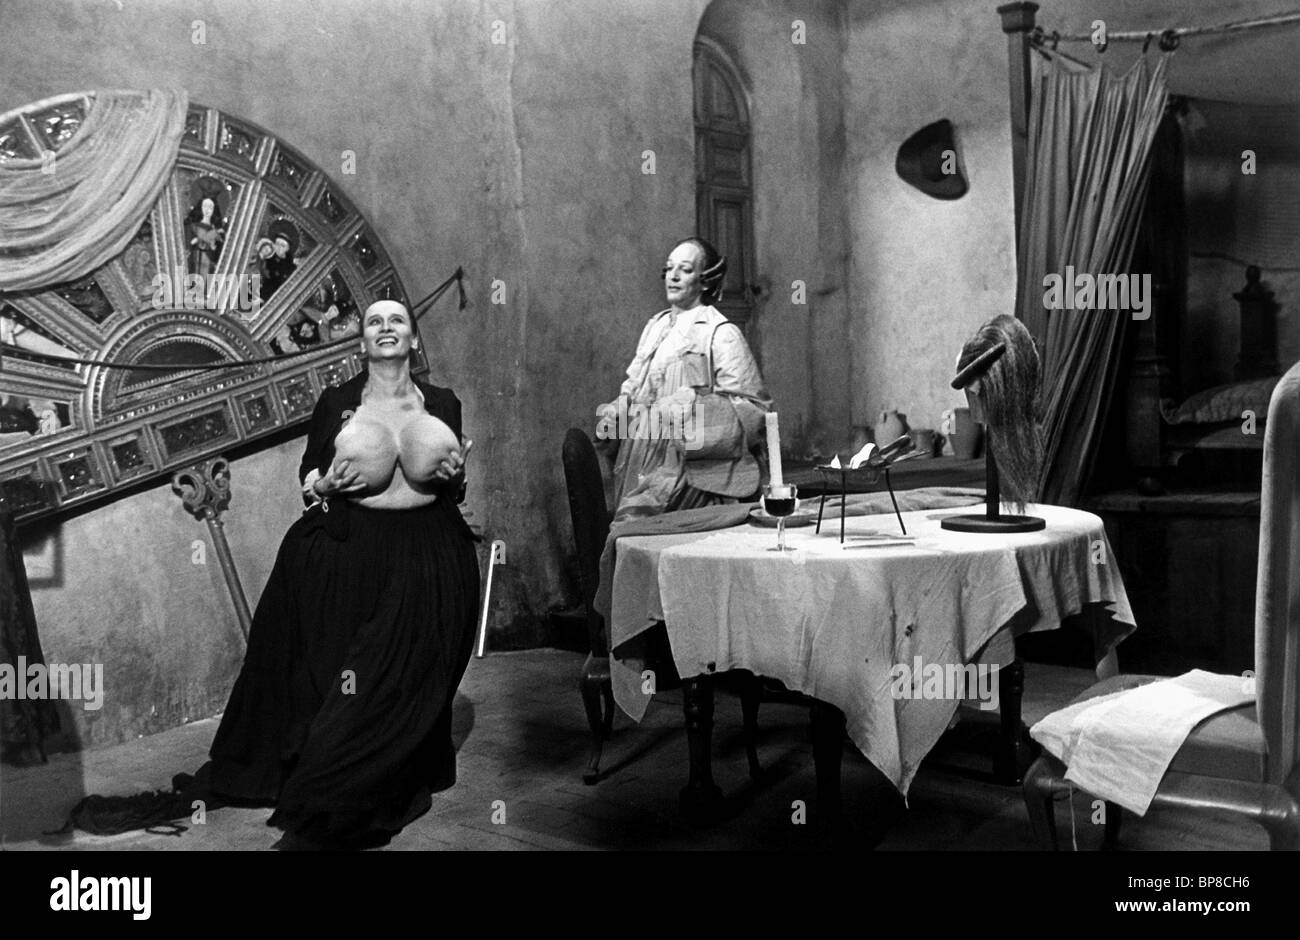 Donald chesty sutherland morgan cabinet.ect.kz: Fellini's. 